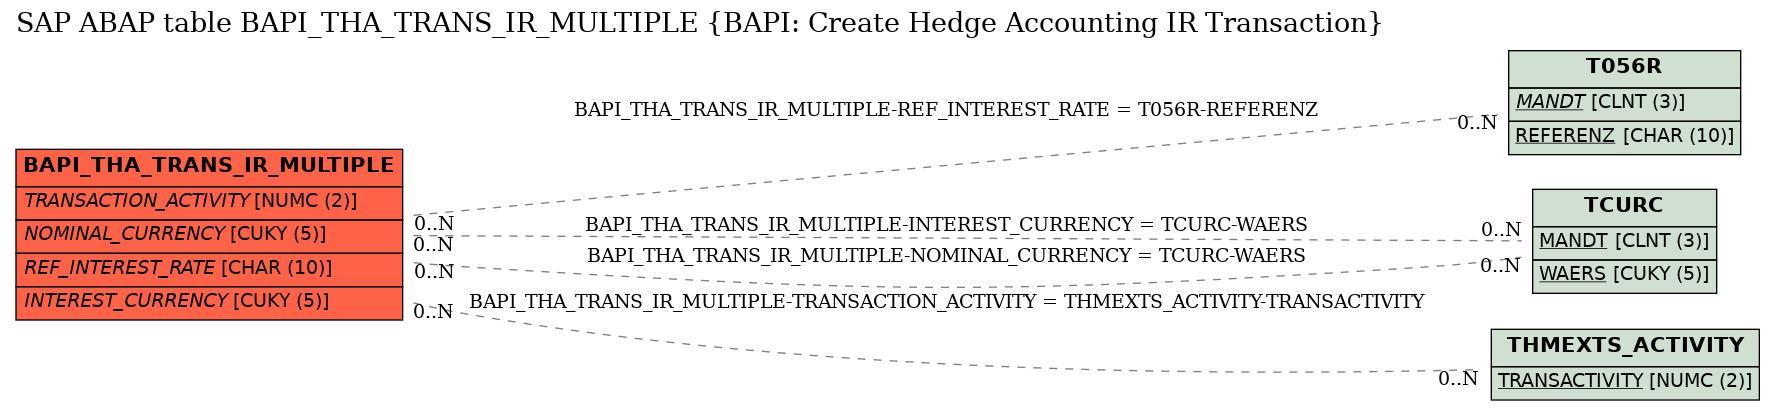 E-R Diagram for table BAPI_THA_TRANS_IR_MULTIPLE (BAPI: Create Hedge Accounting IR Transaction)